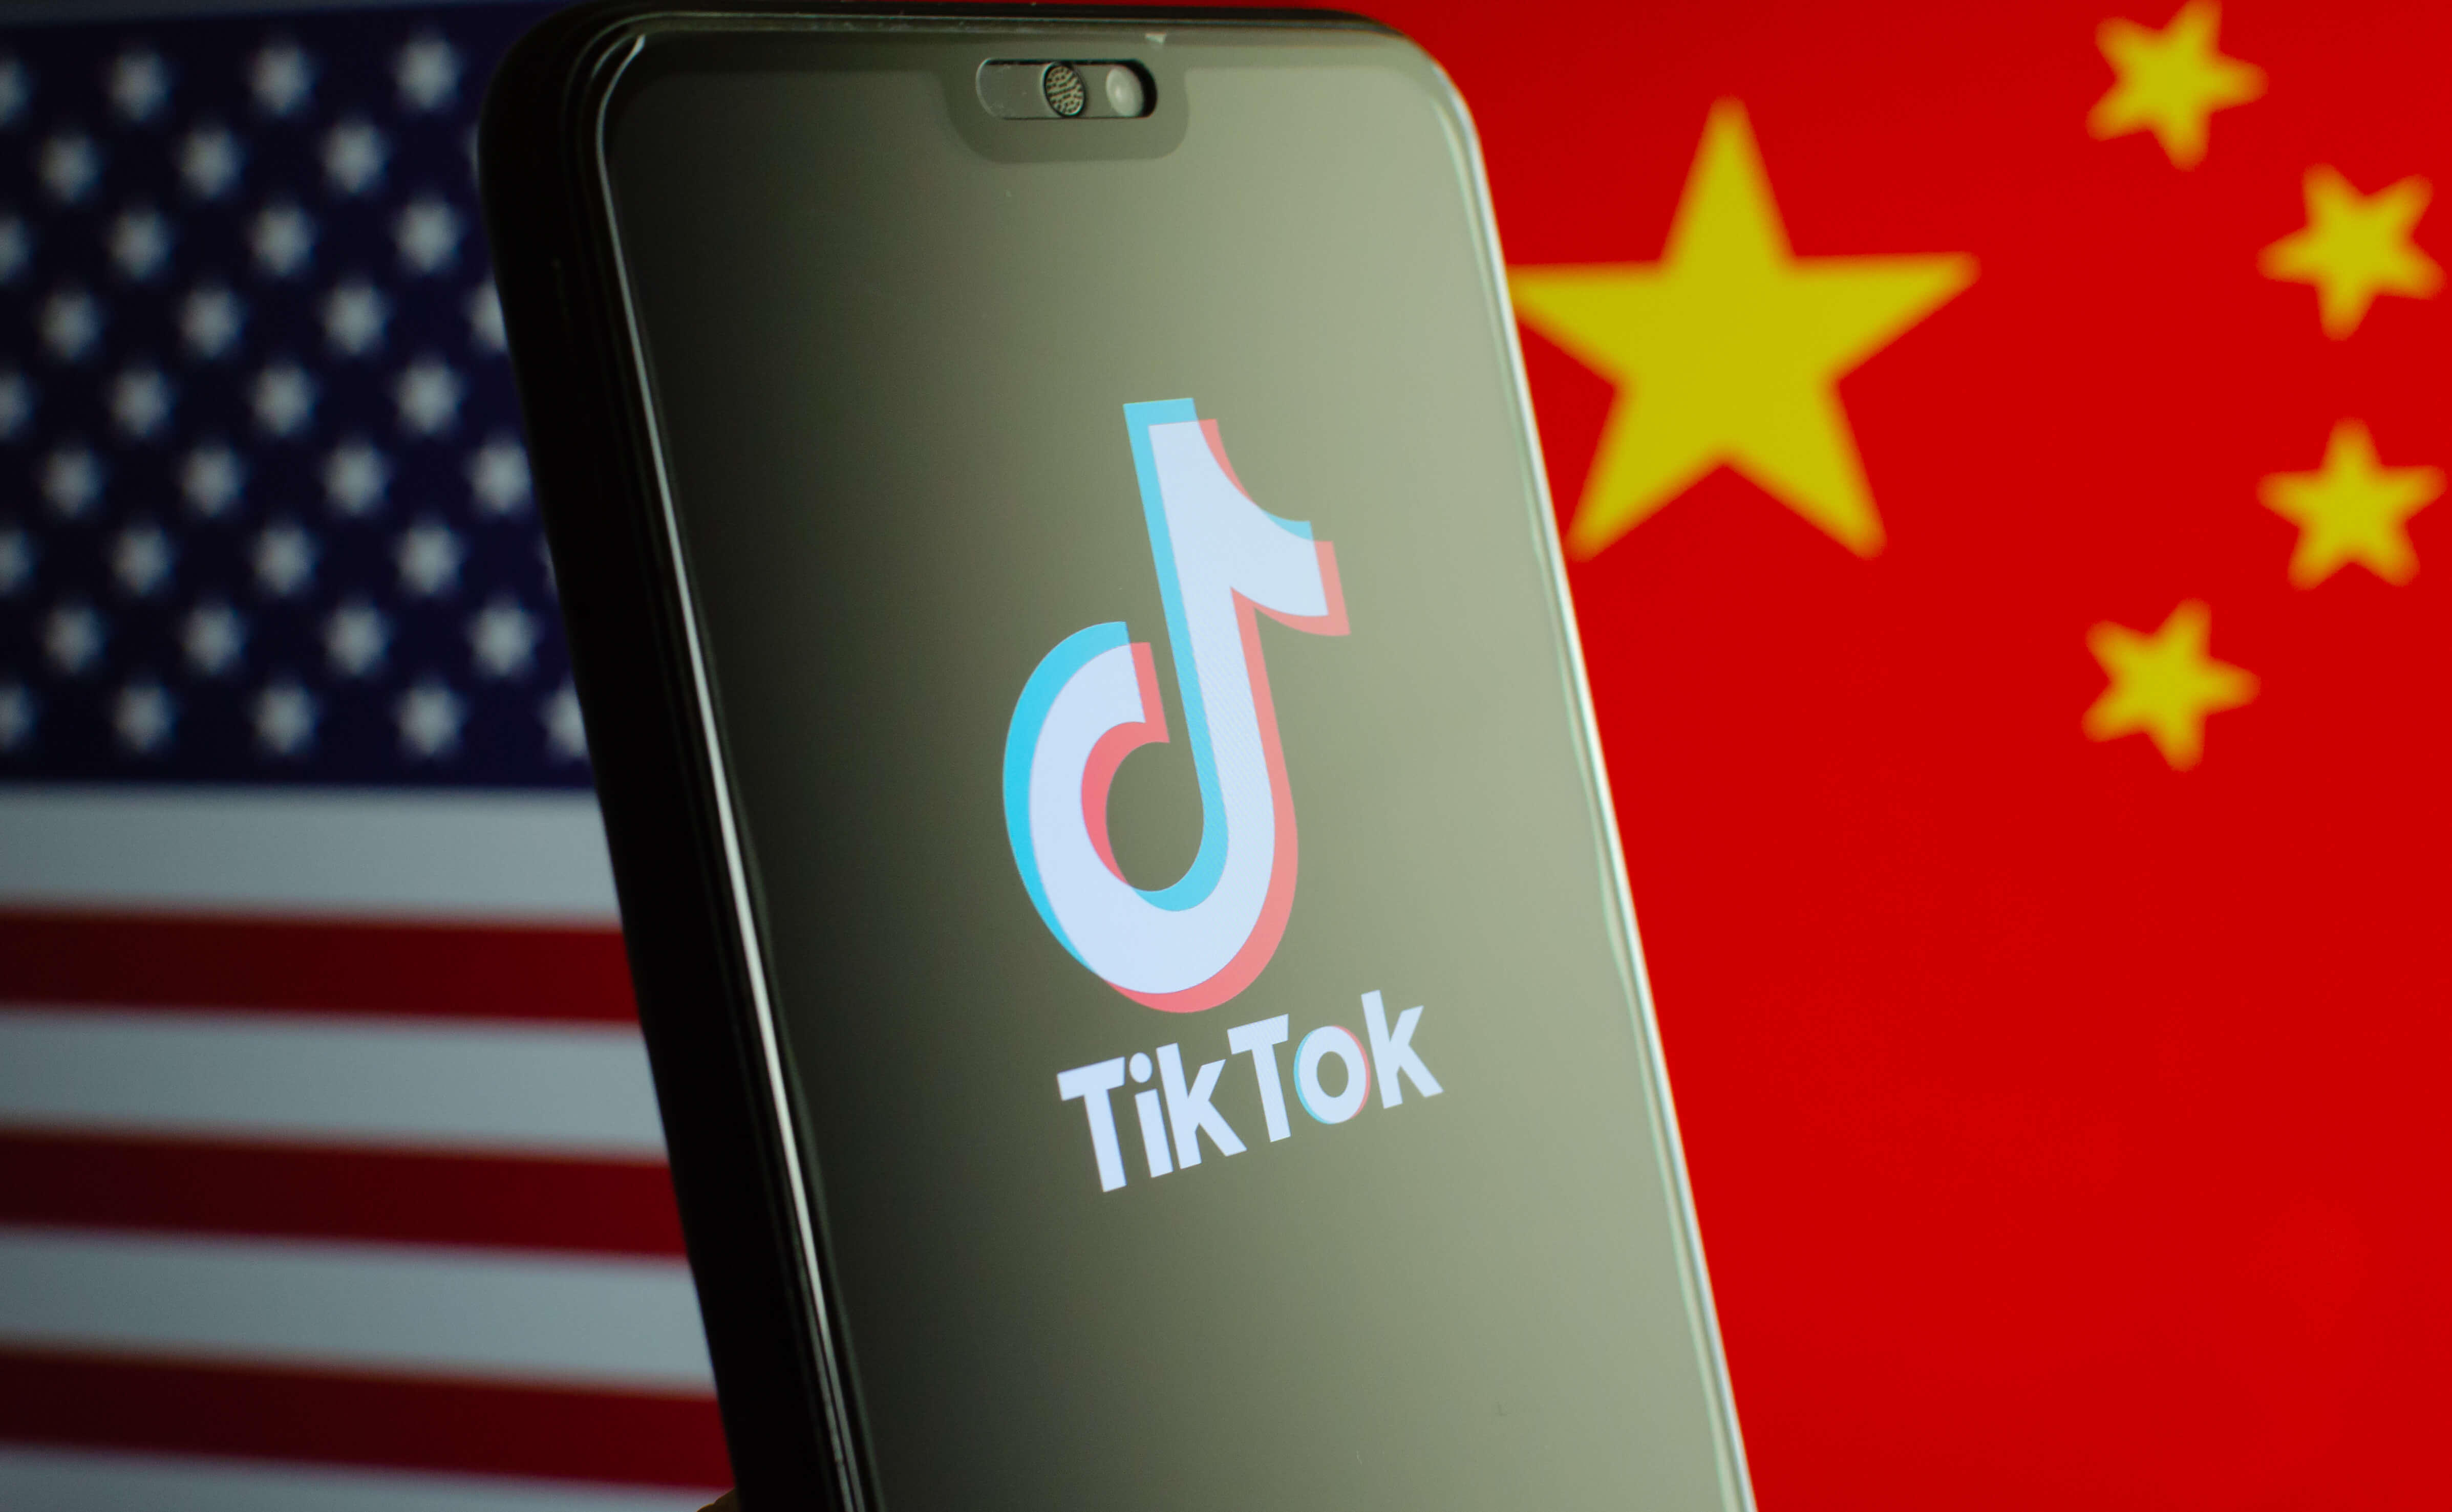 More than 65 million Americans deleting the TikTok app?